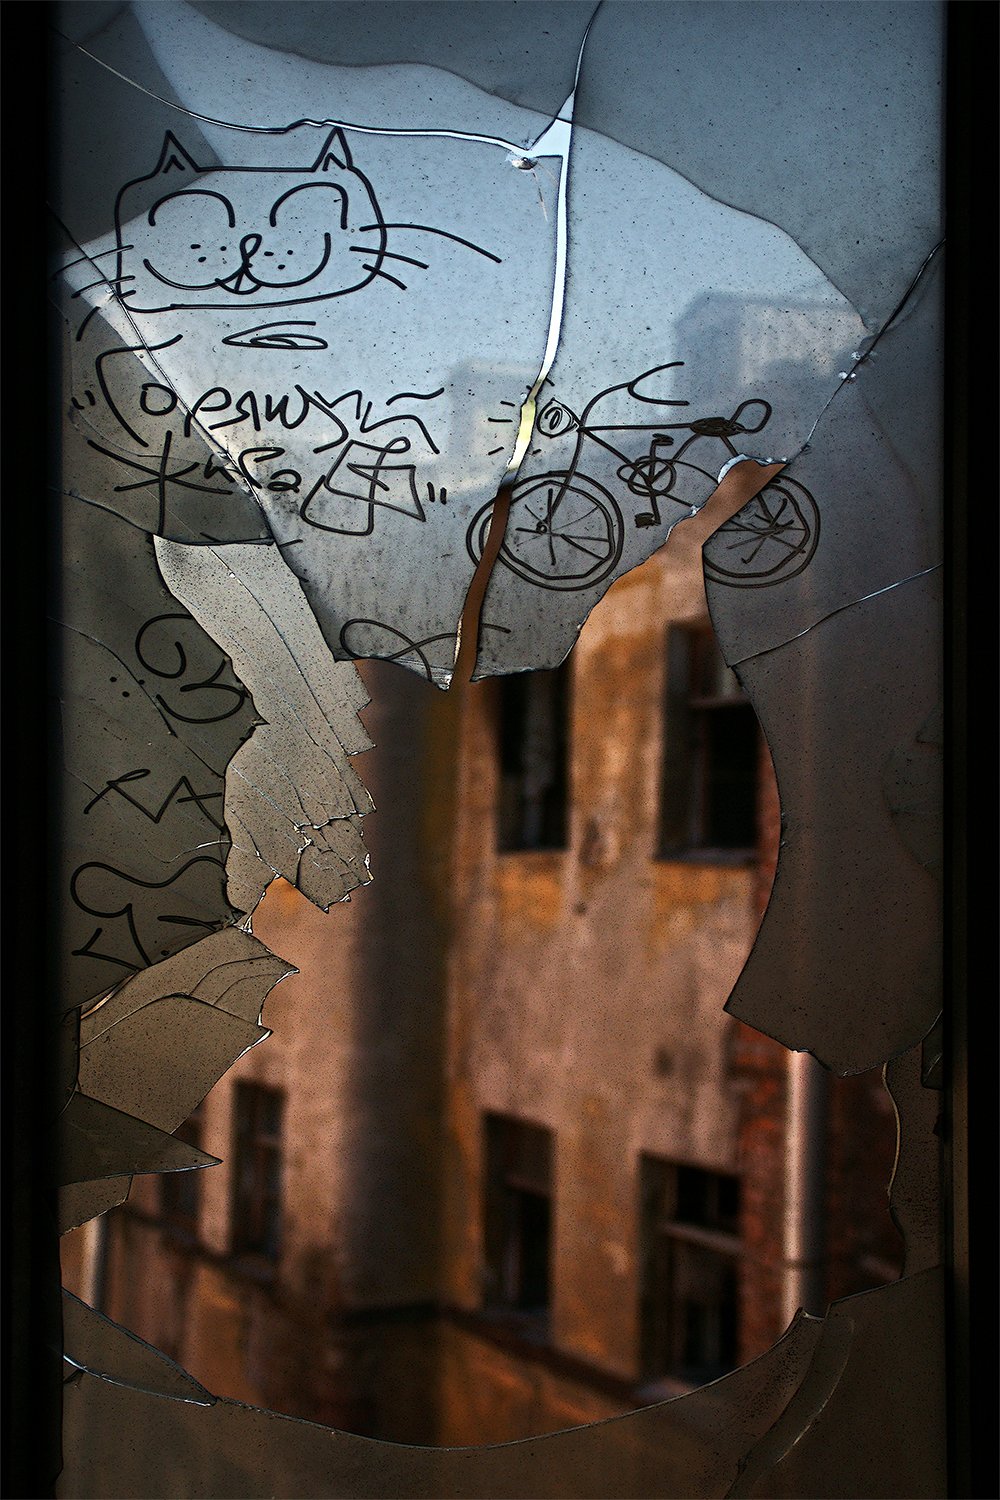 #deep.spb, #deepspb, #санктпетербург, #петербург, #спб, #питер, #saintpetersburg, #petersburg, #spb, #piter, #город, #city, #street, #streetphoto, #streetphotography, #cityscape, #urbex, #urbexphoto, #urbanexploration, #abandoned, #steps, #door, #window, deep.spb